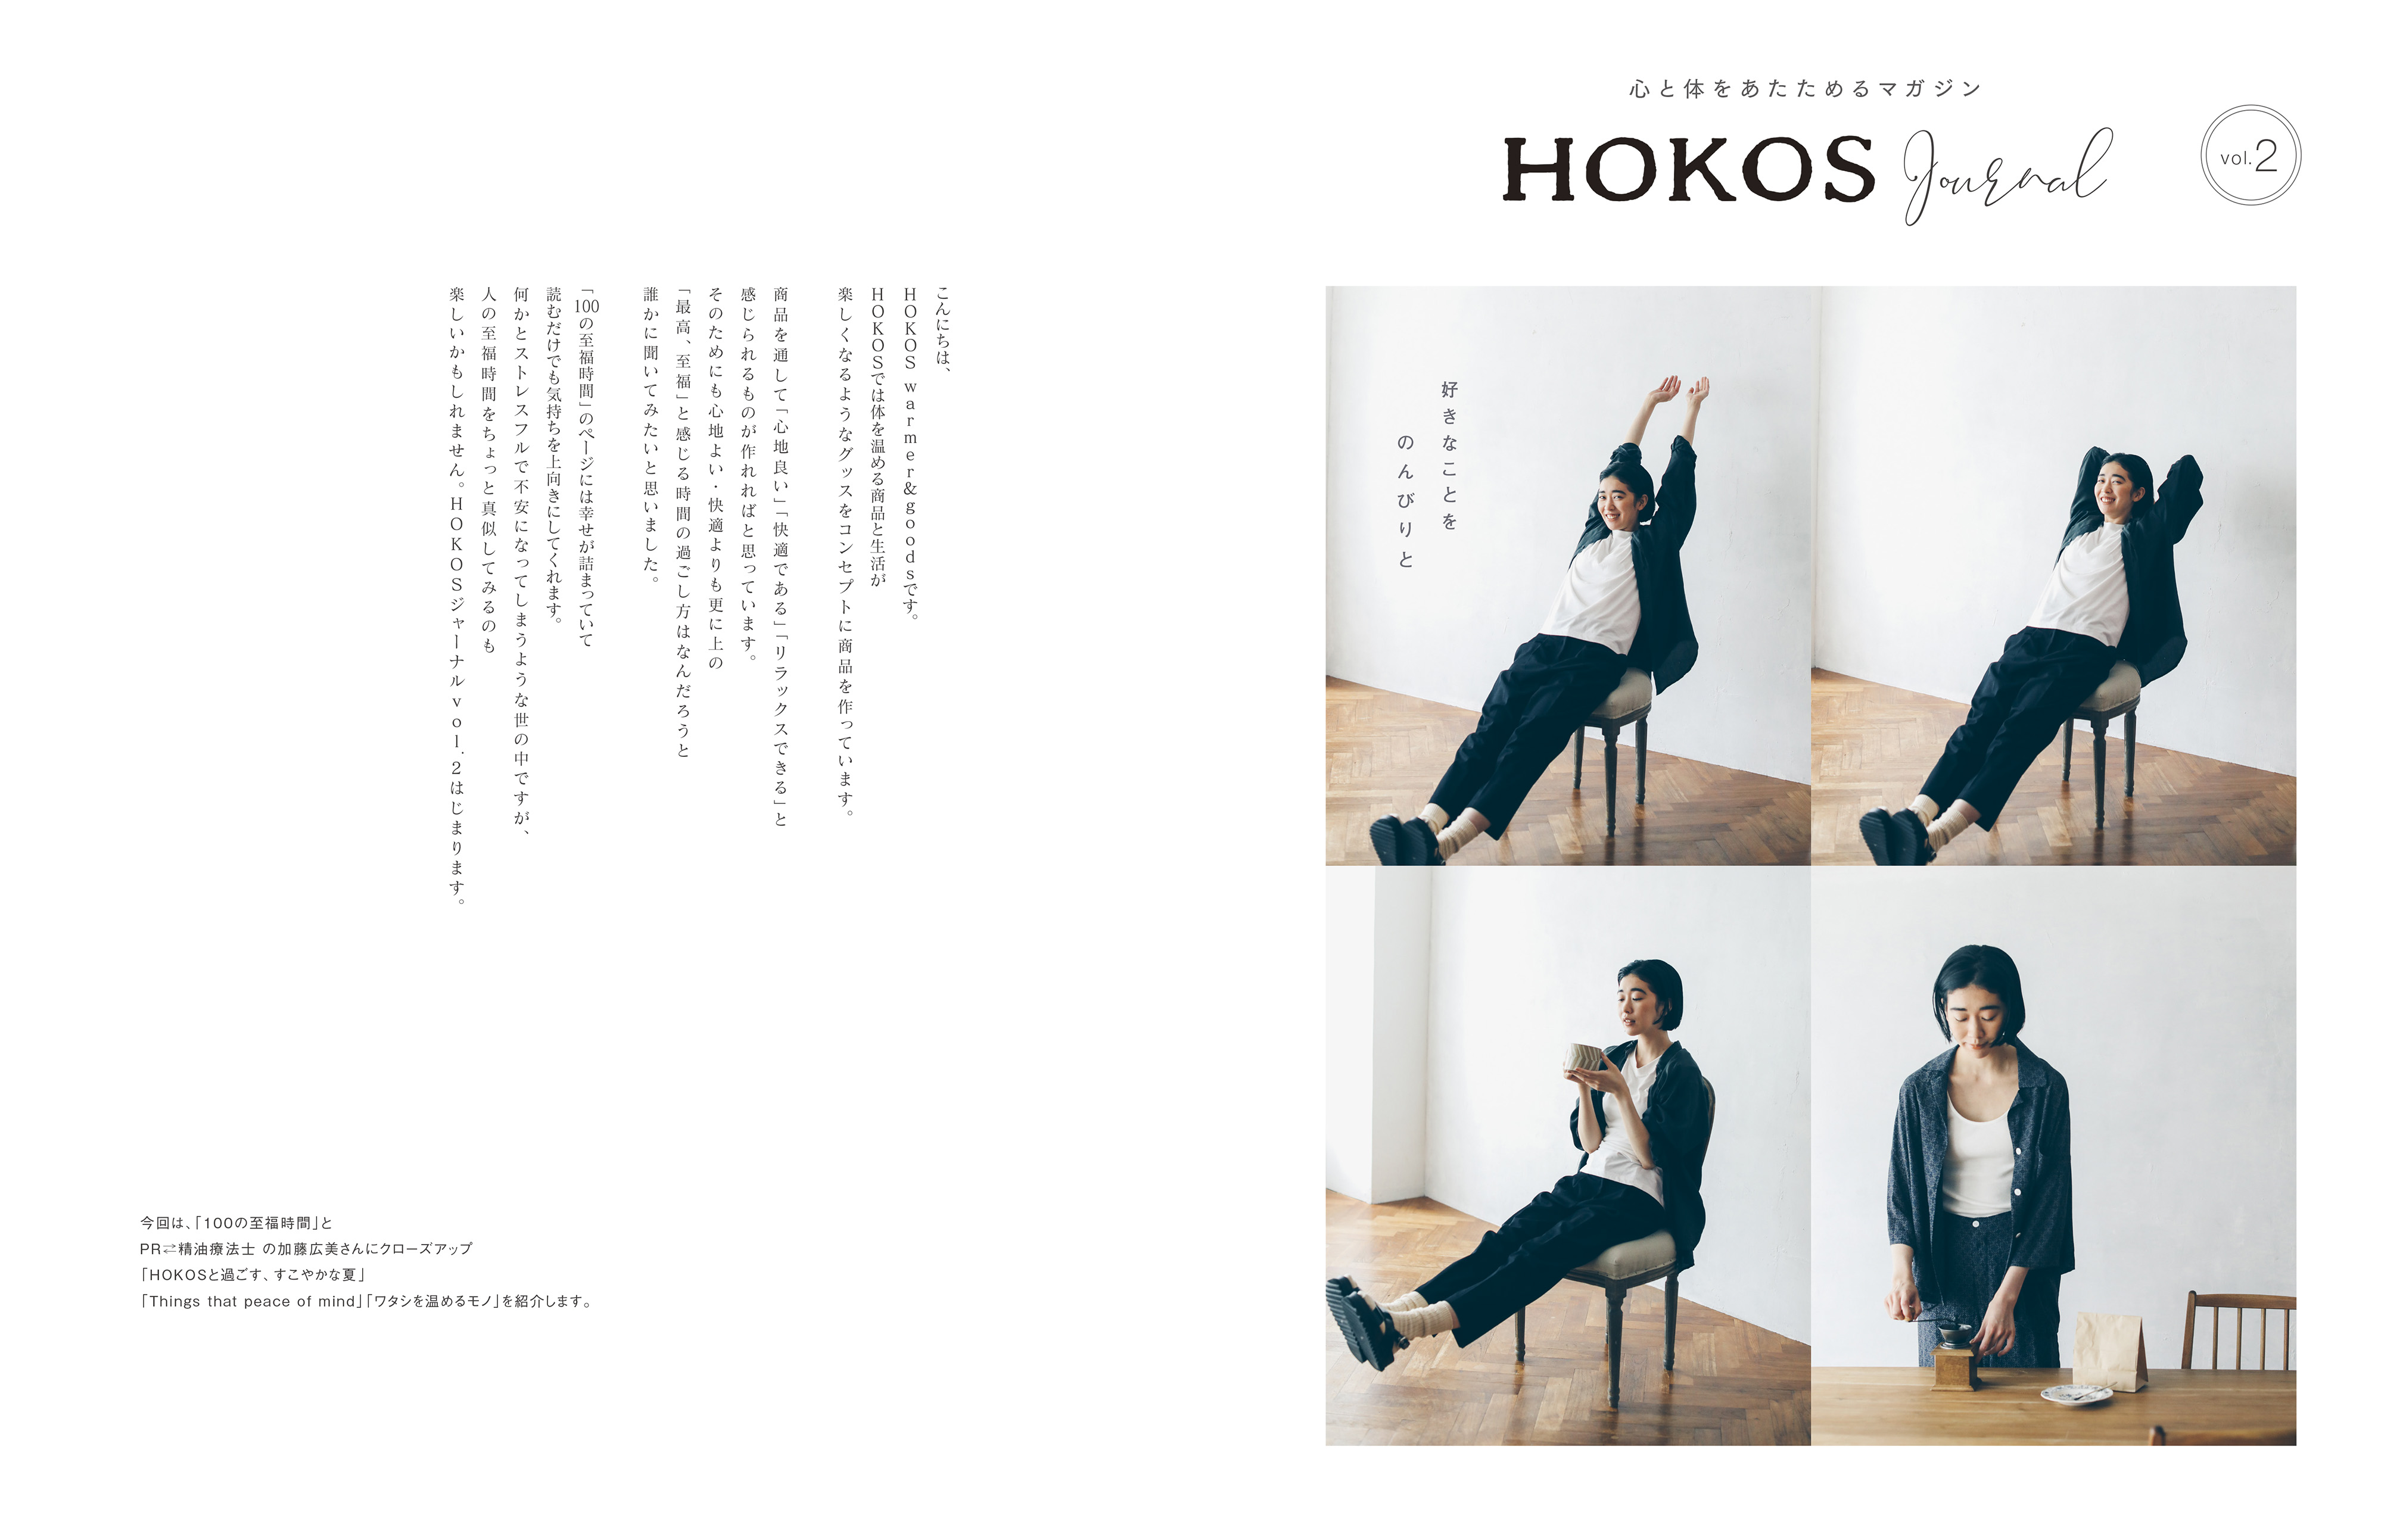 HOKOS journal Vol.2